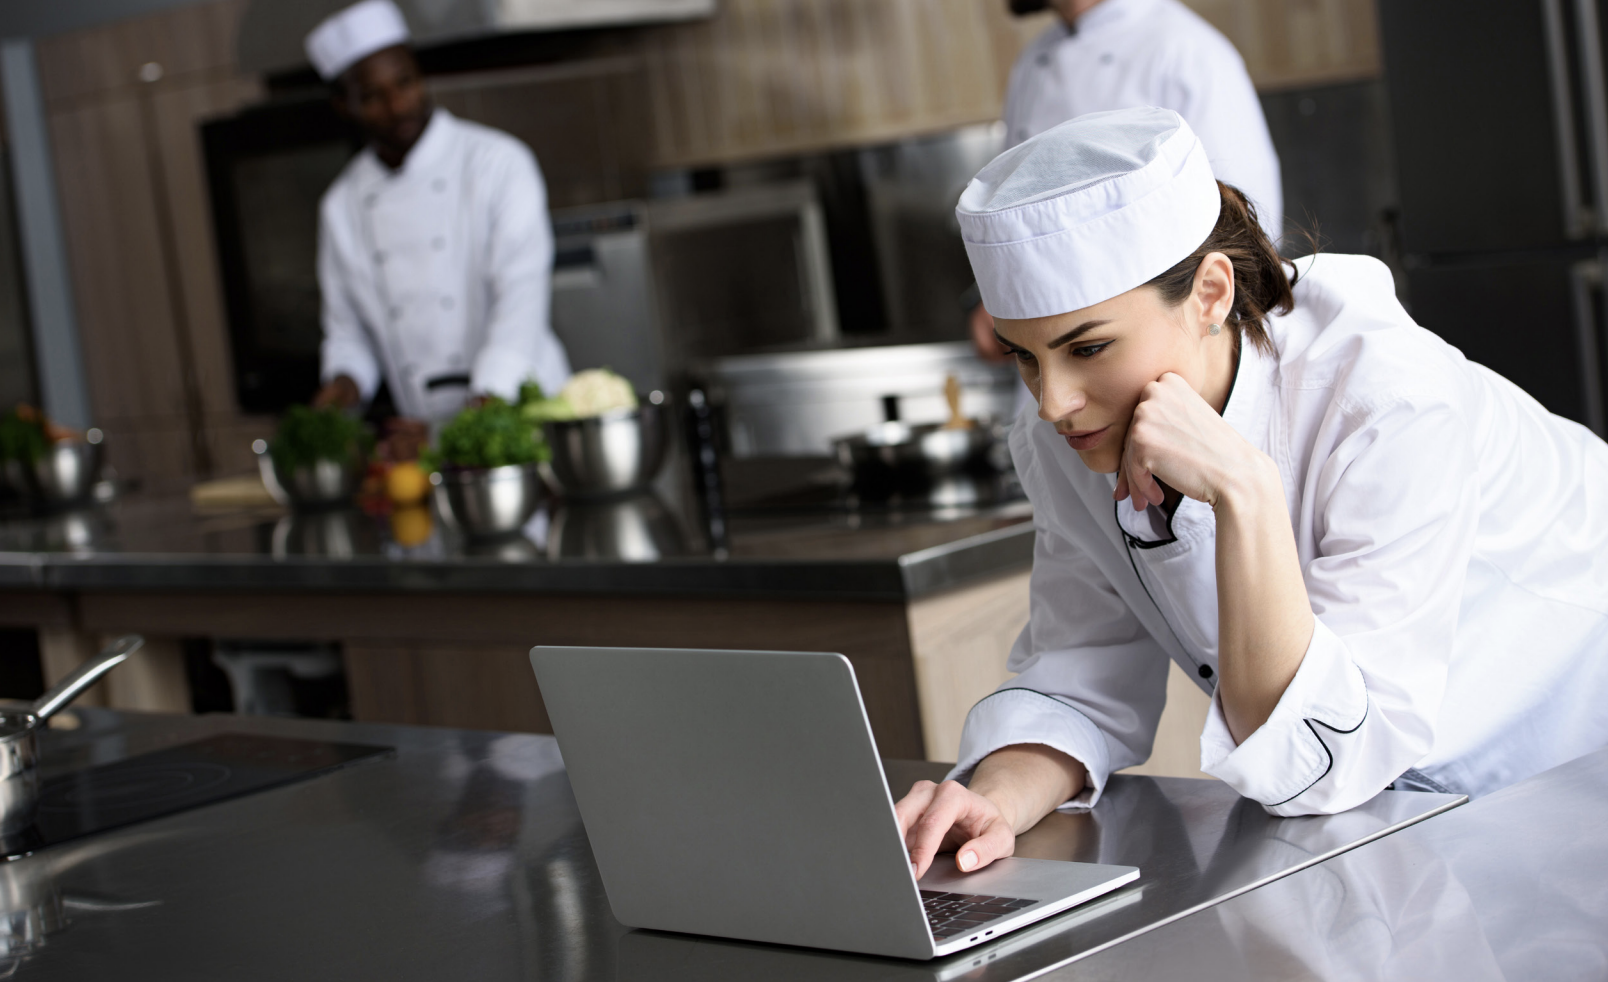 Restaurant Management Suite for ROI Driven Brands